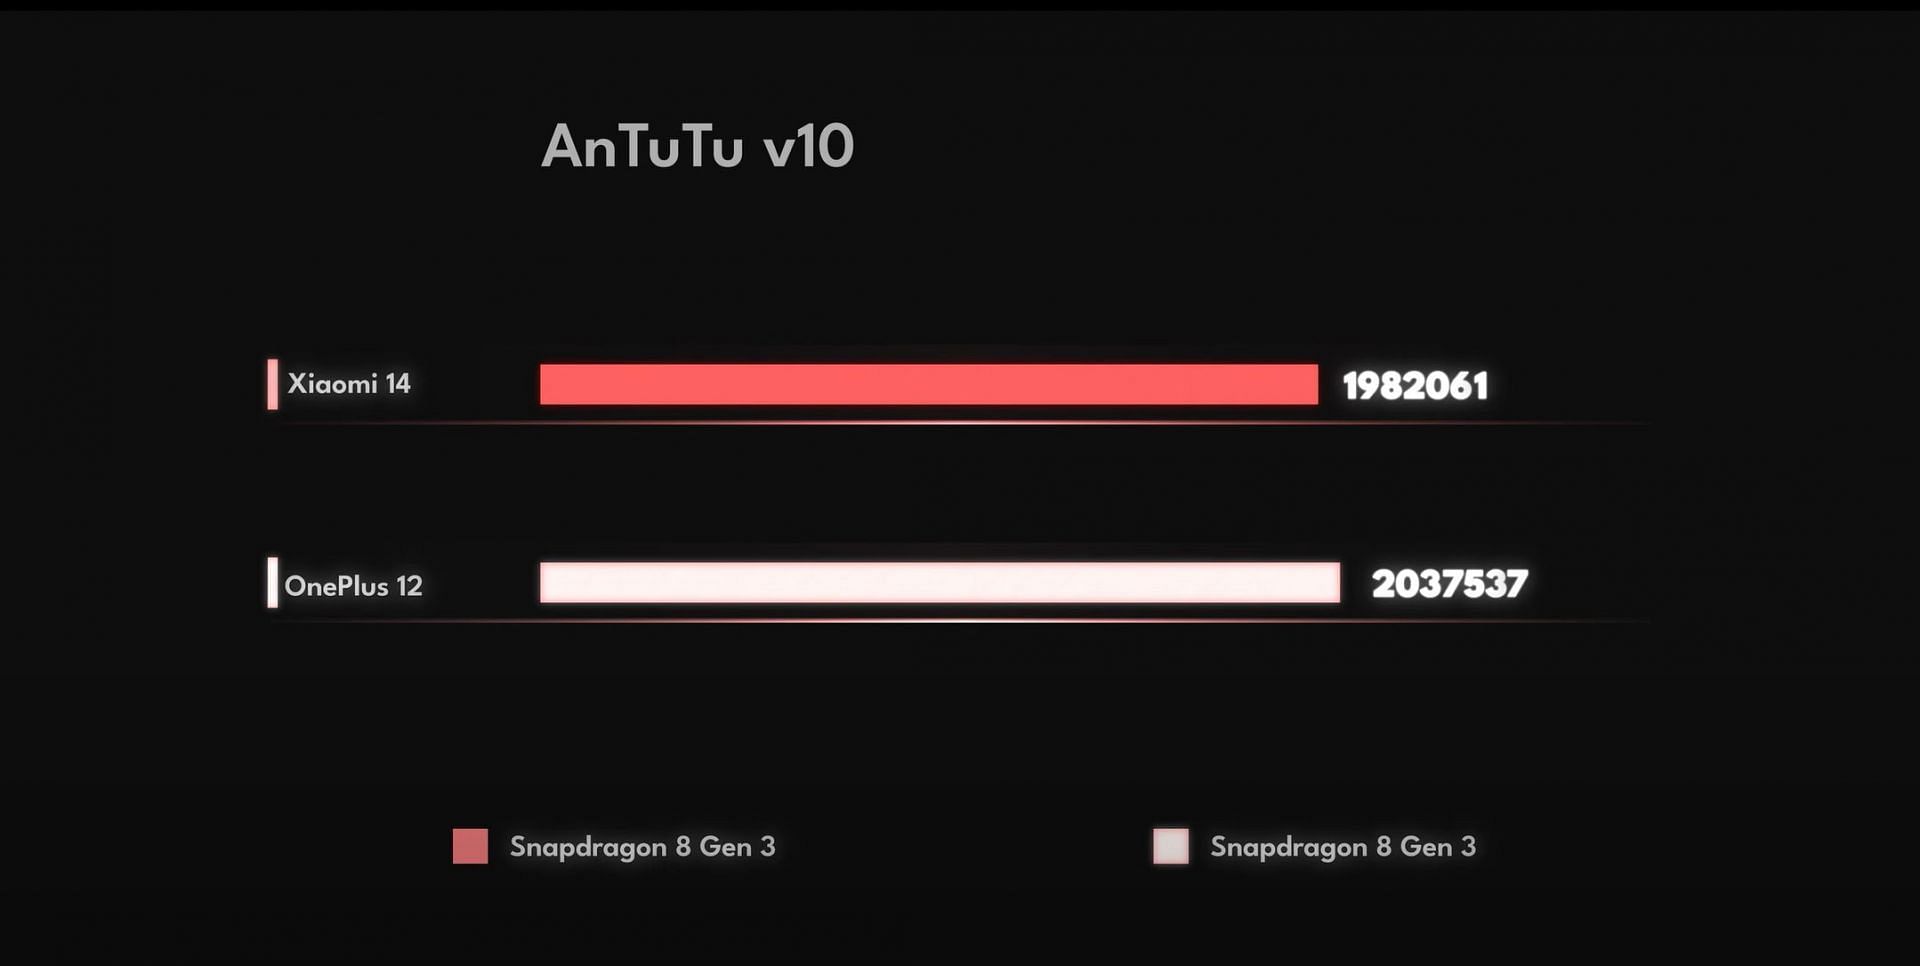 The Xiaomi 14 has a lower Antutu score when compared to the OnePlus 12 (Image via Trakin Tech English/YouTube)